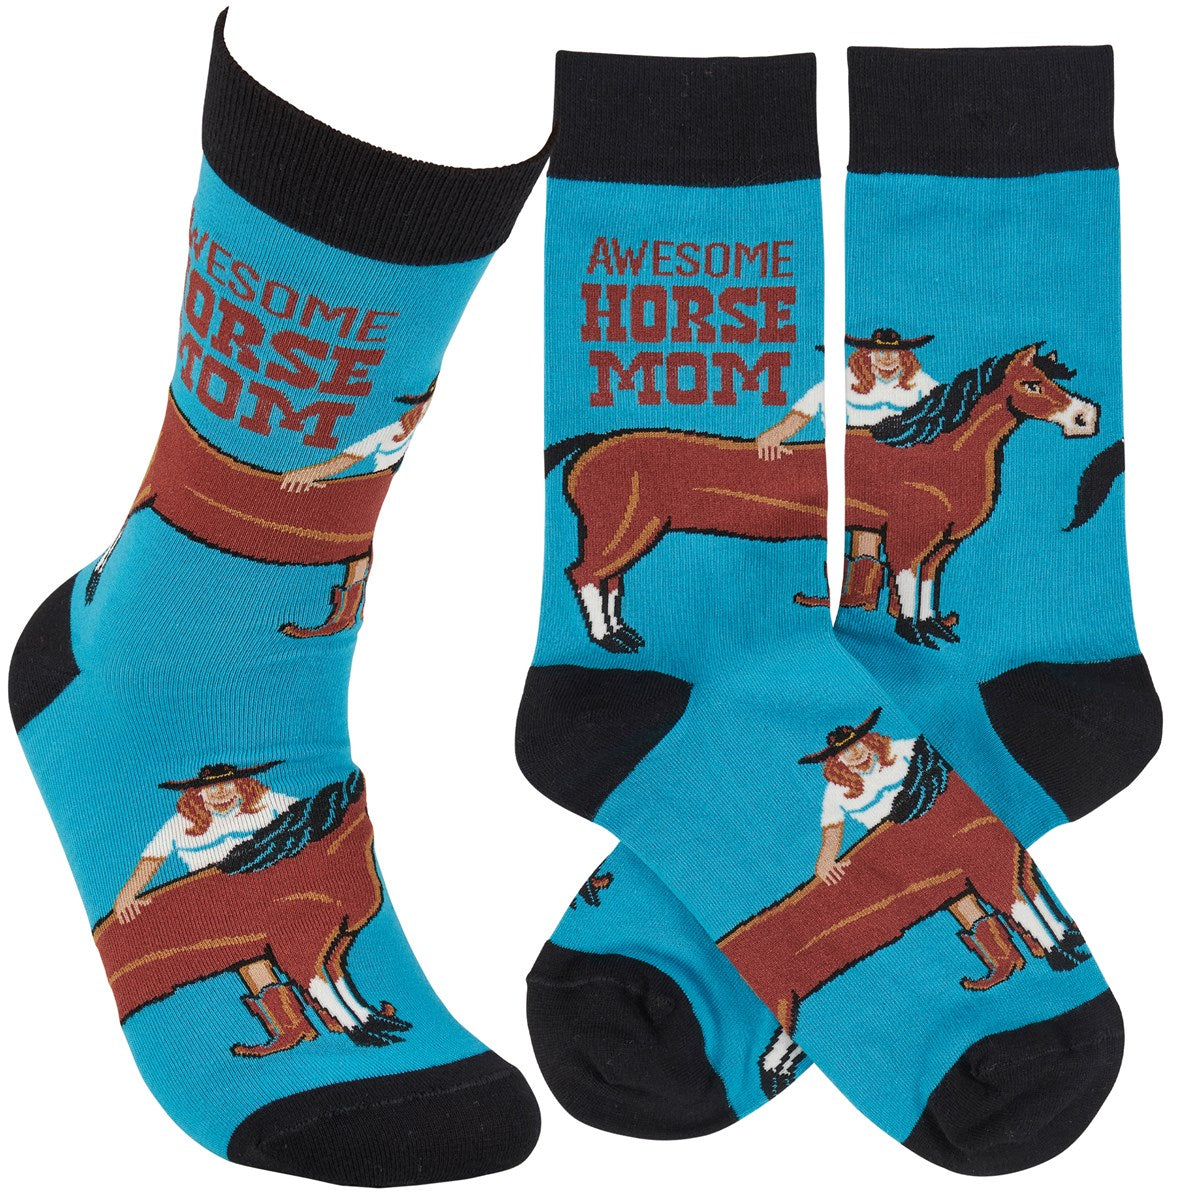 Awesome Horse Mom Fun Novelty Socks